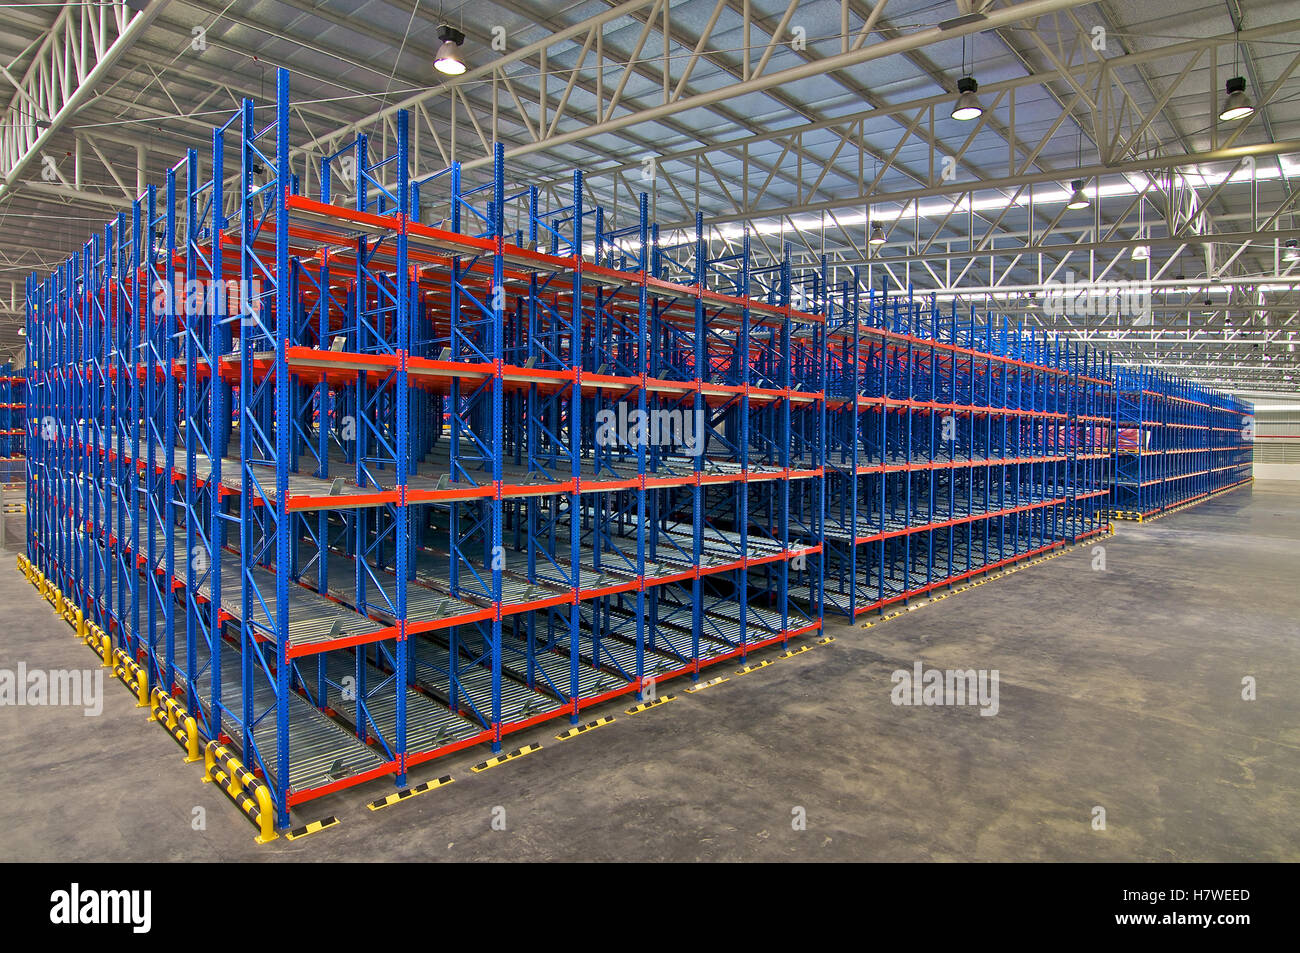 Warehouse industrial shelving storage system shelving metal pallet racking Stock Photo